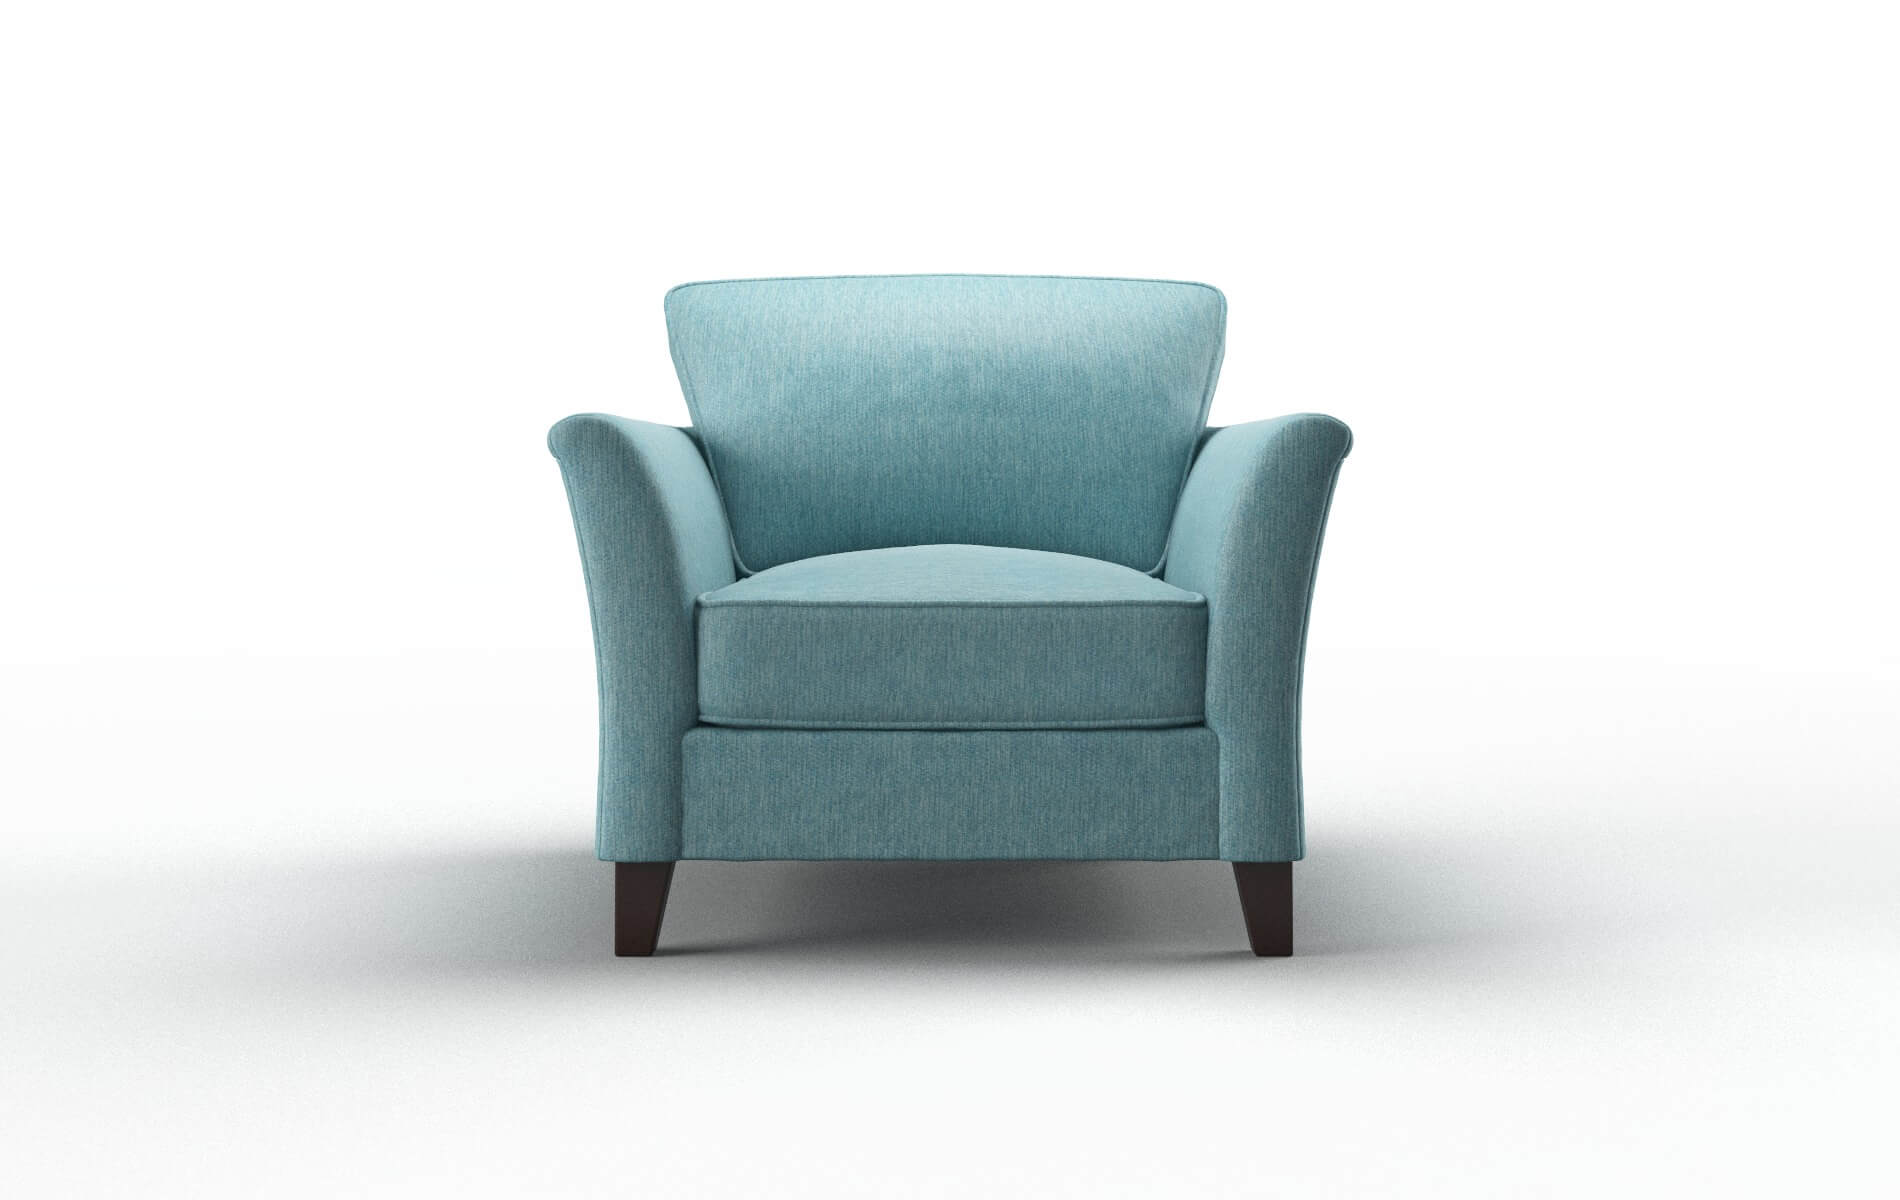 Cologne Cosmo Turquoise chair espresso legs